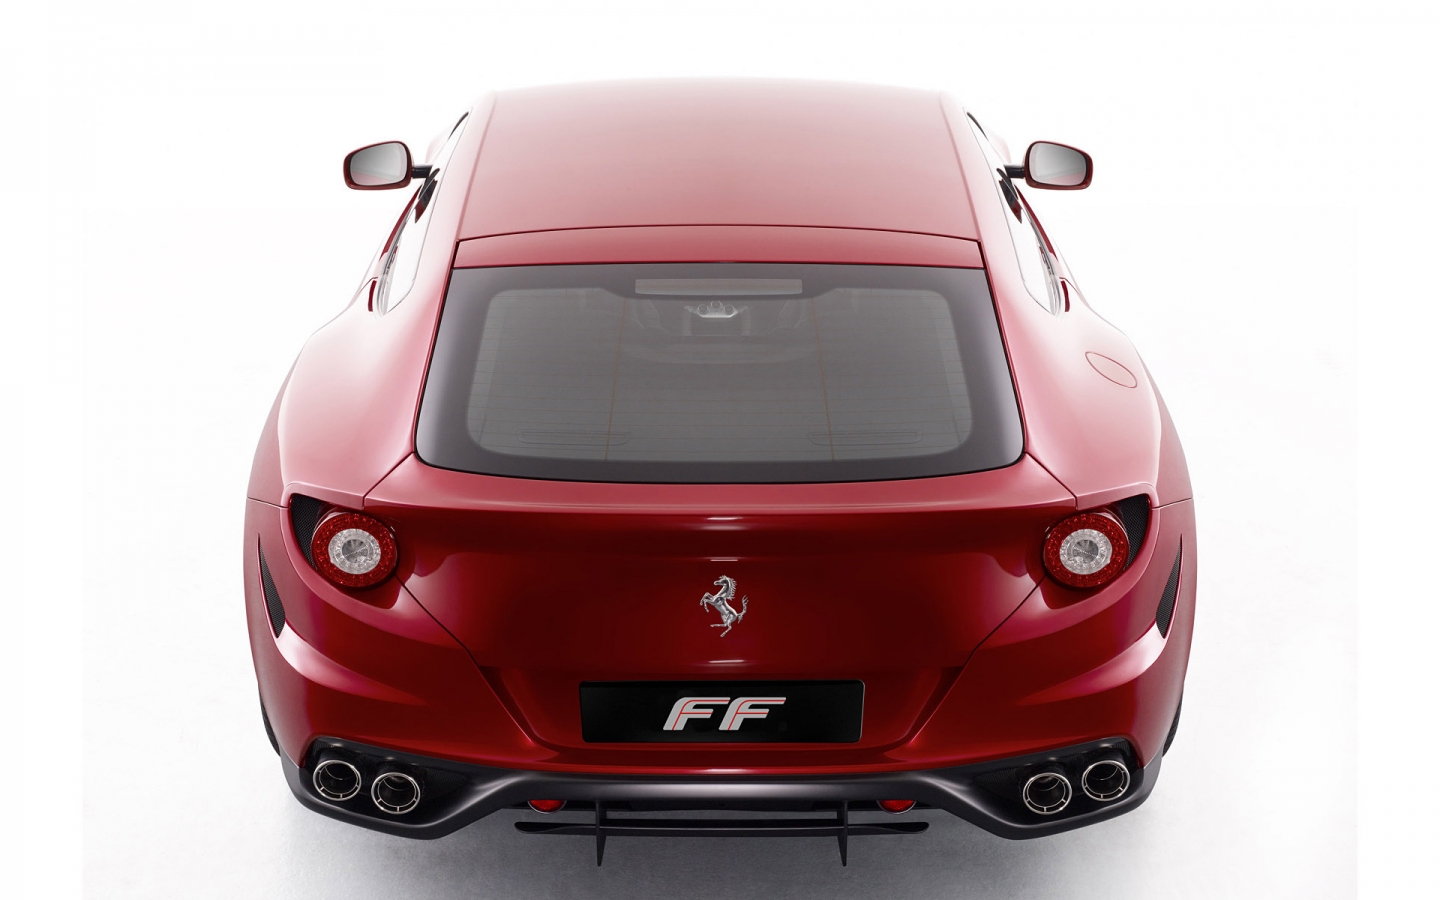 Ferrari FF Rear for 1440 x 900 widescreen resolution